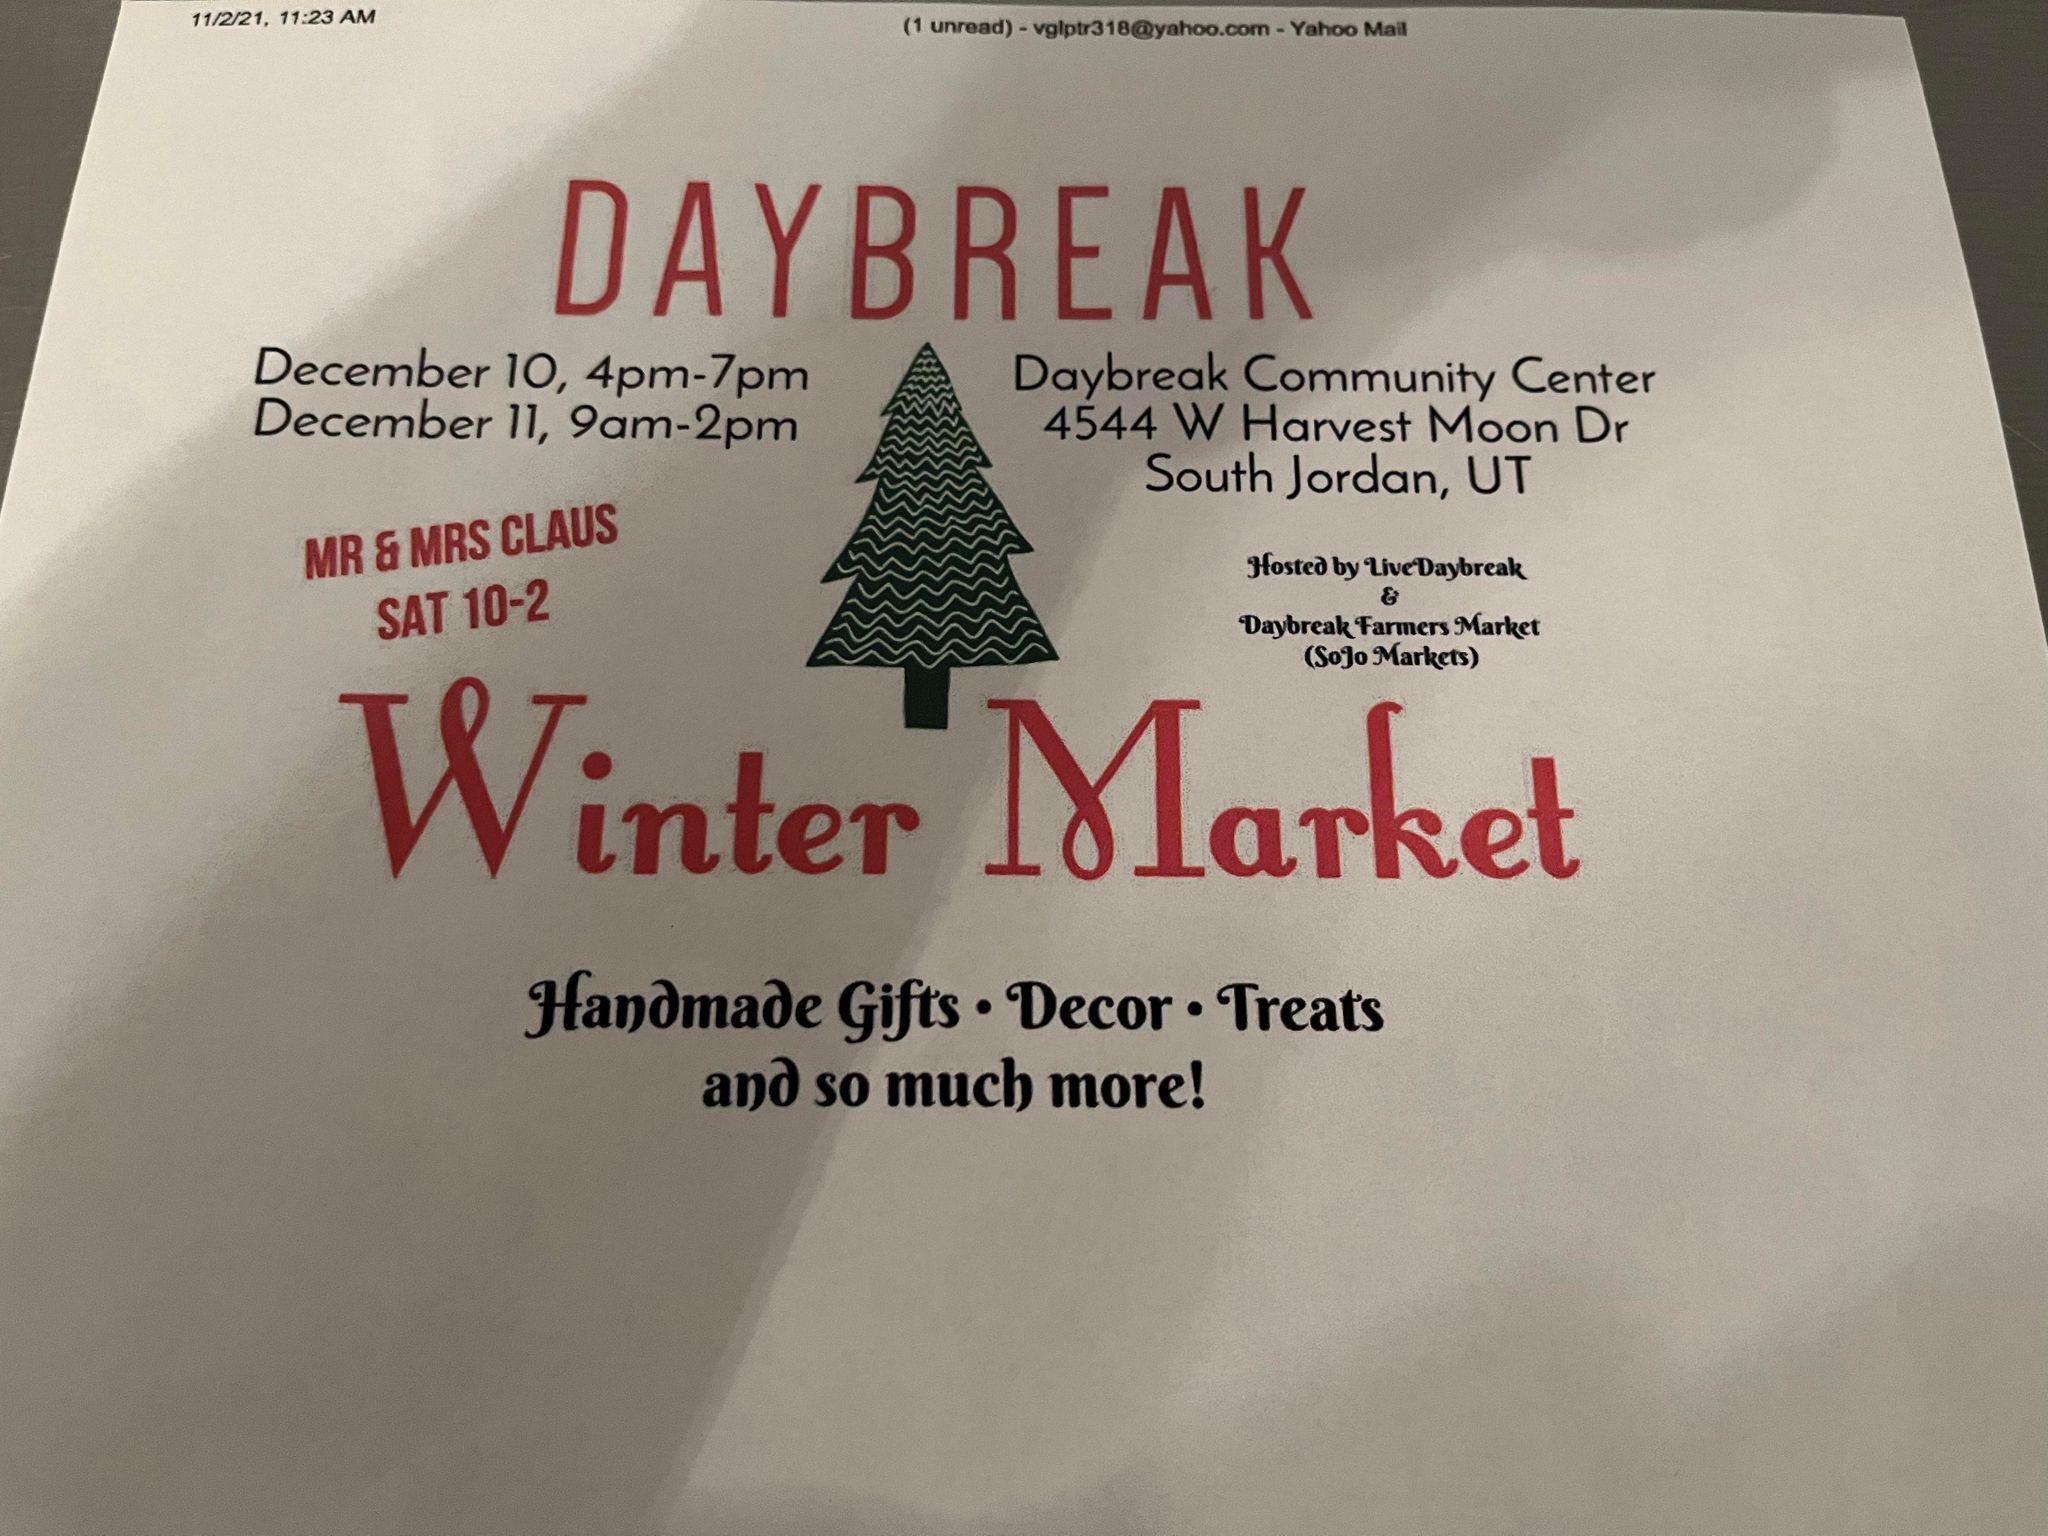 Daybreak Winter Market event